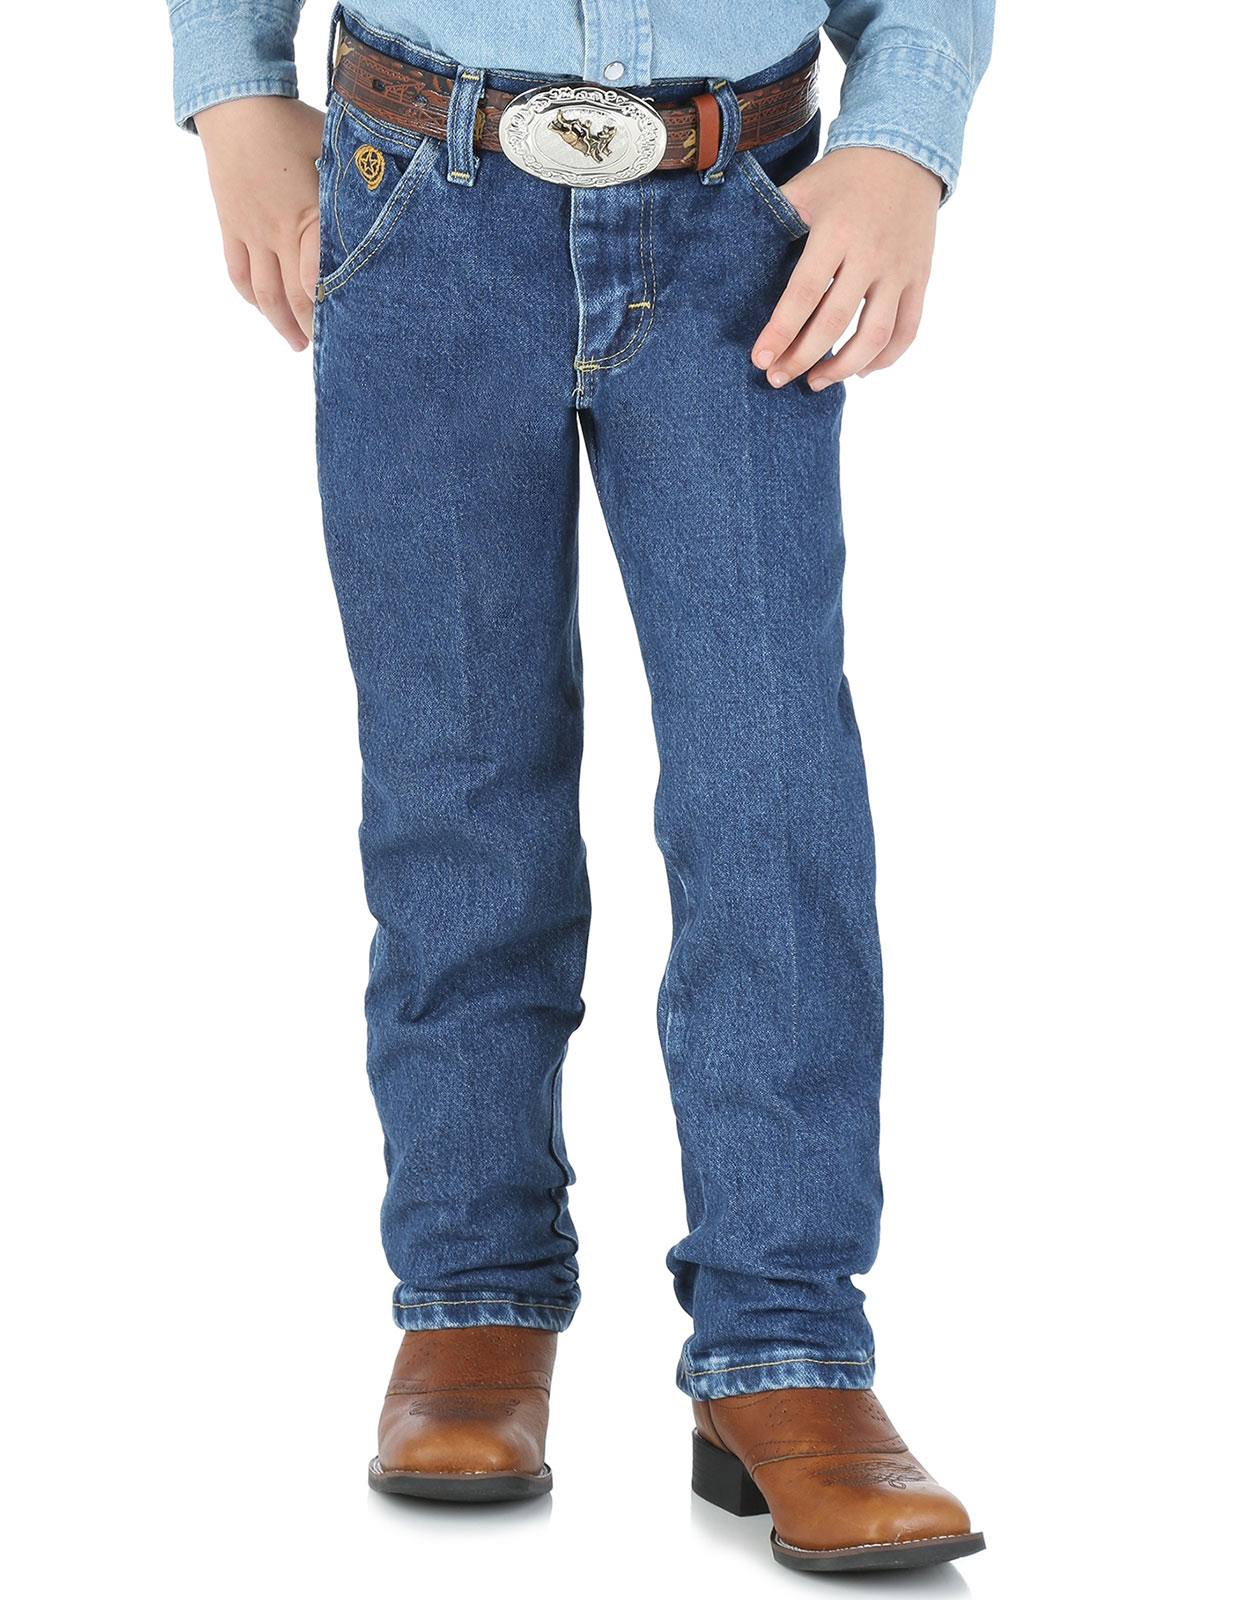 Boy's Wrangler George Straight Cowboy Cut Jeans - Heavy Denim Stone